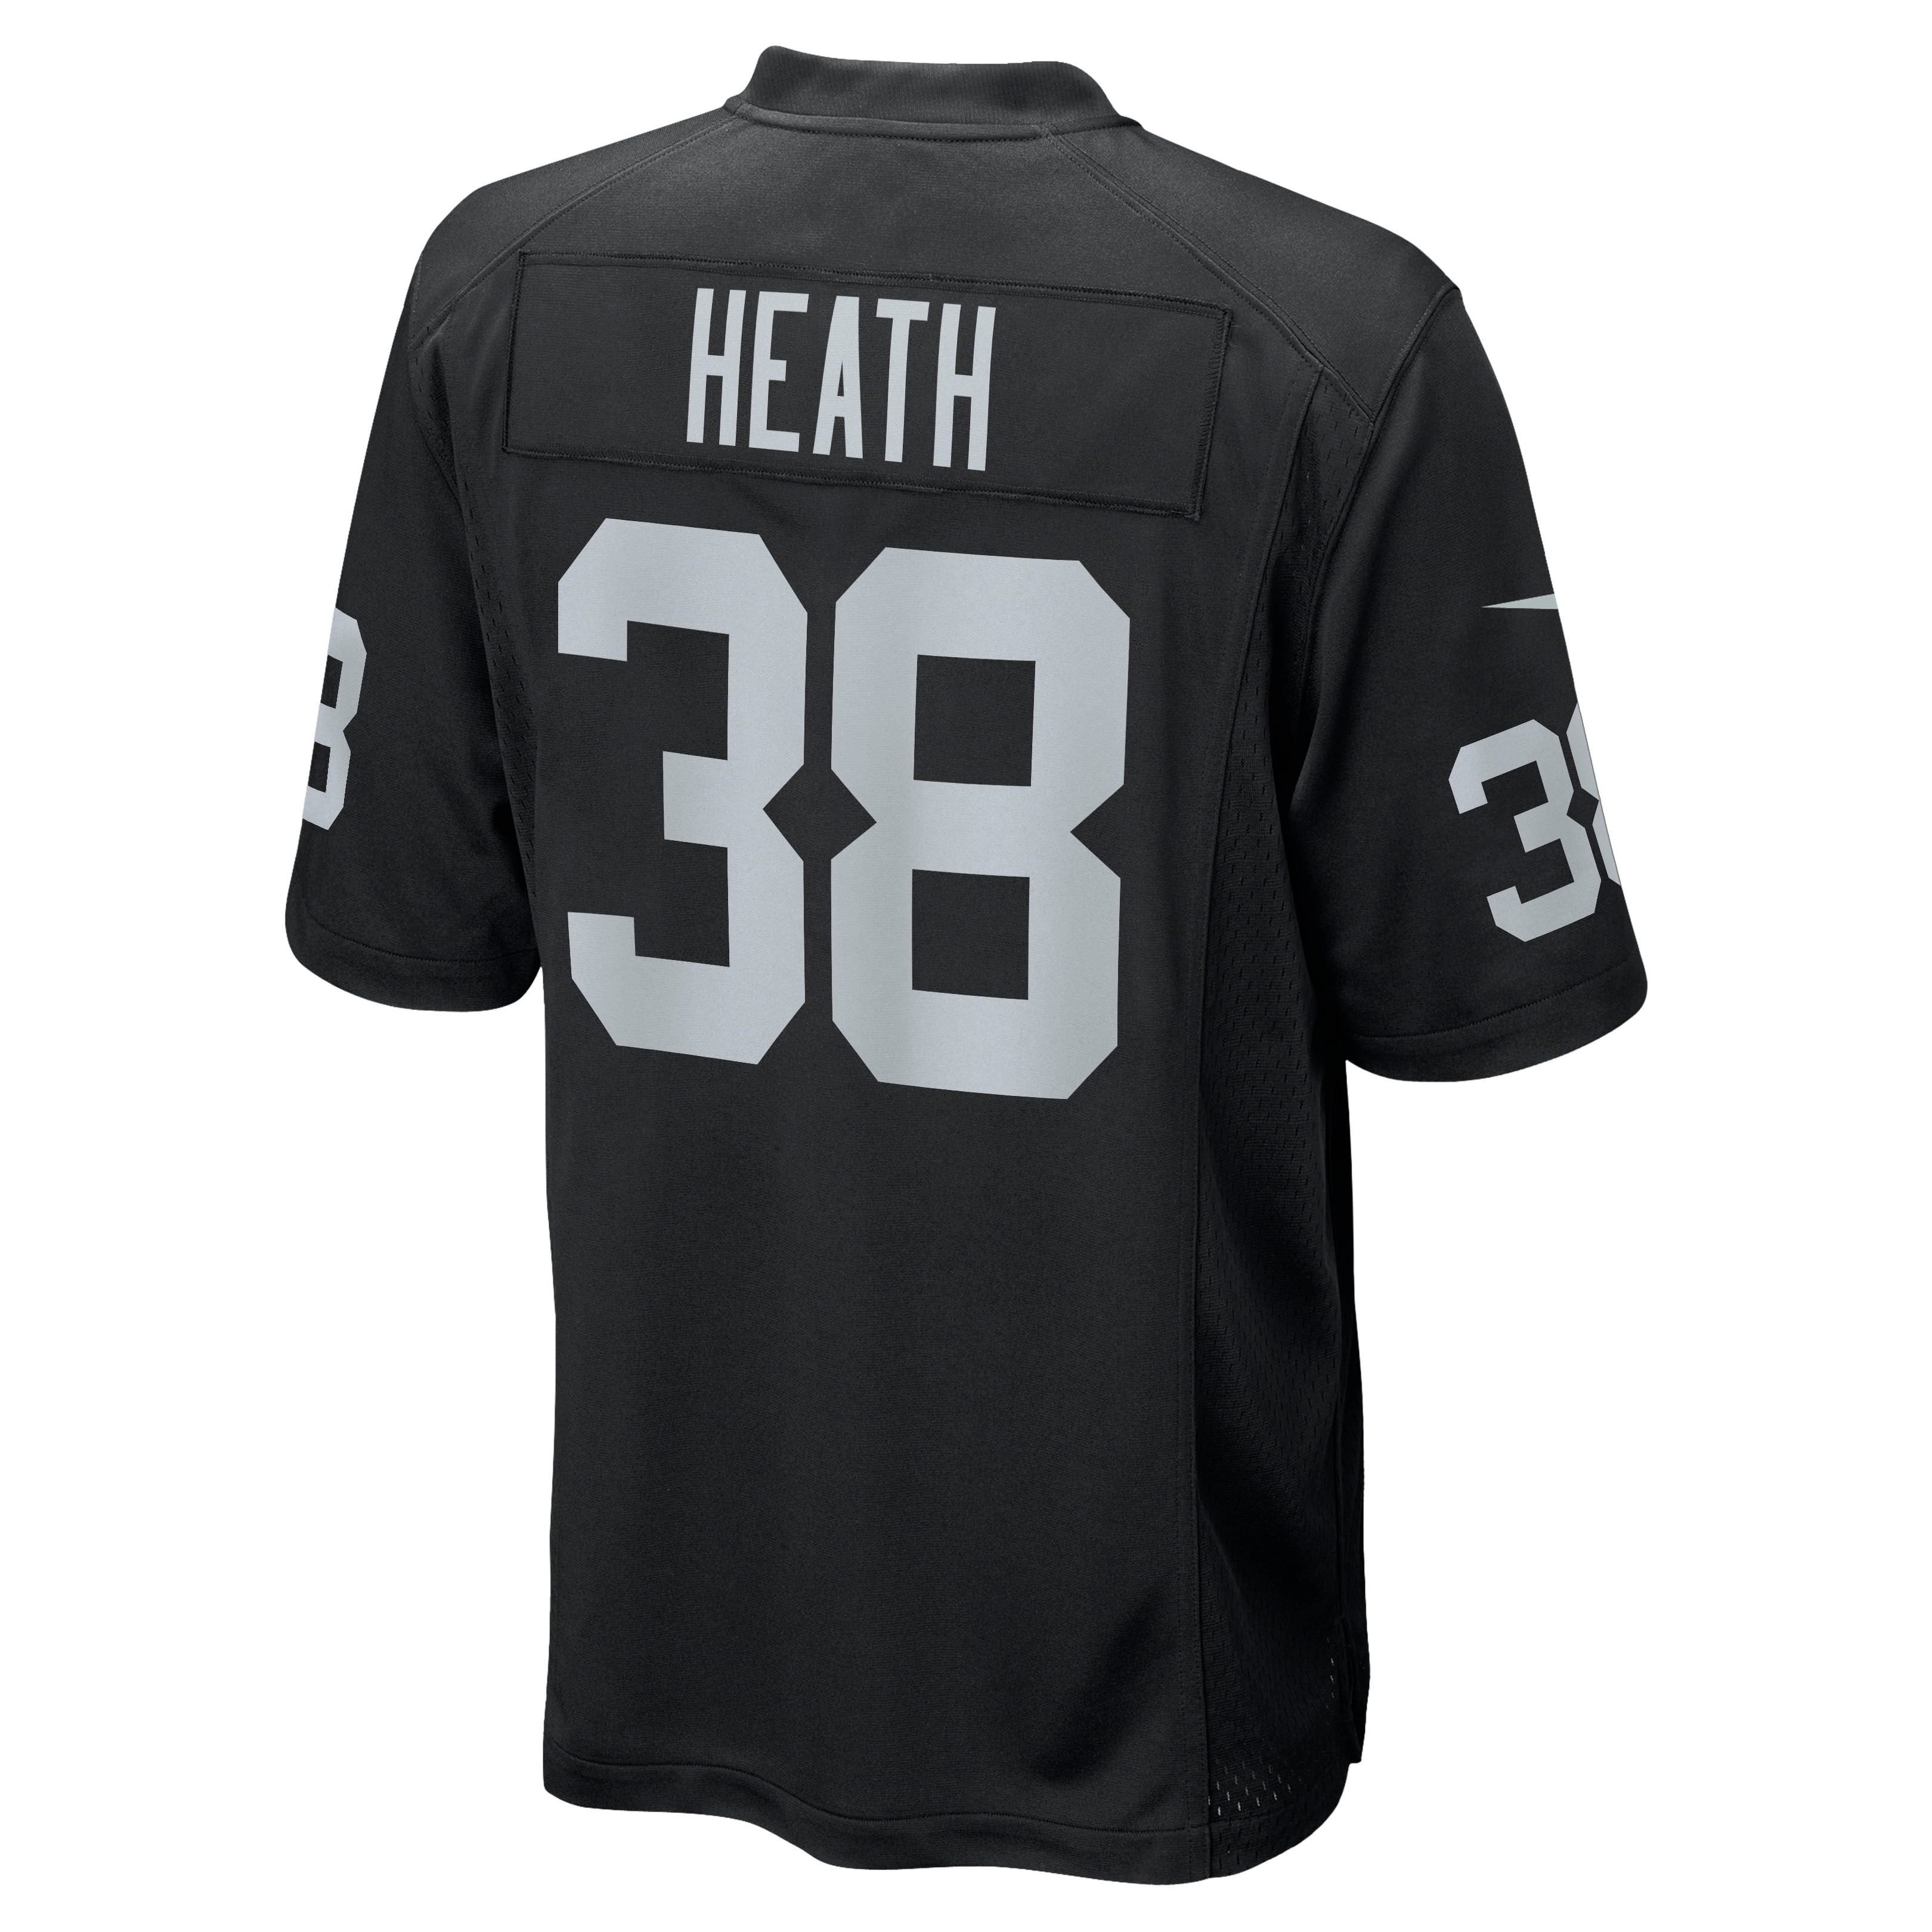 Jeff Heath Las Vegas Raiders Nike Game Jersey - Black